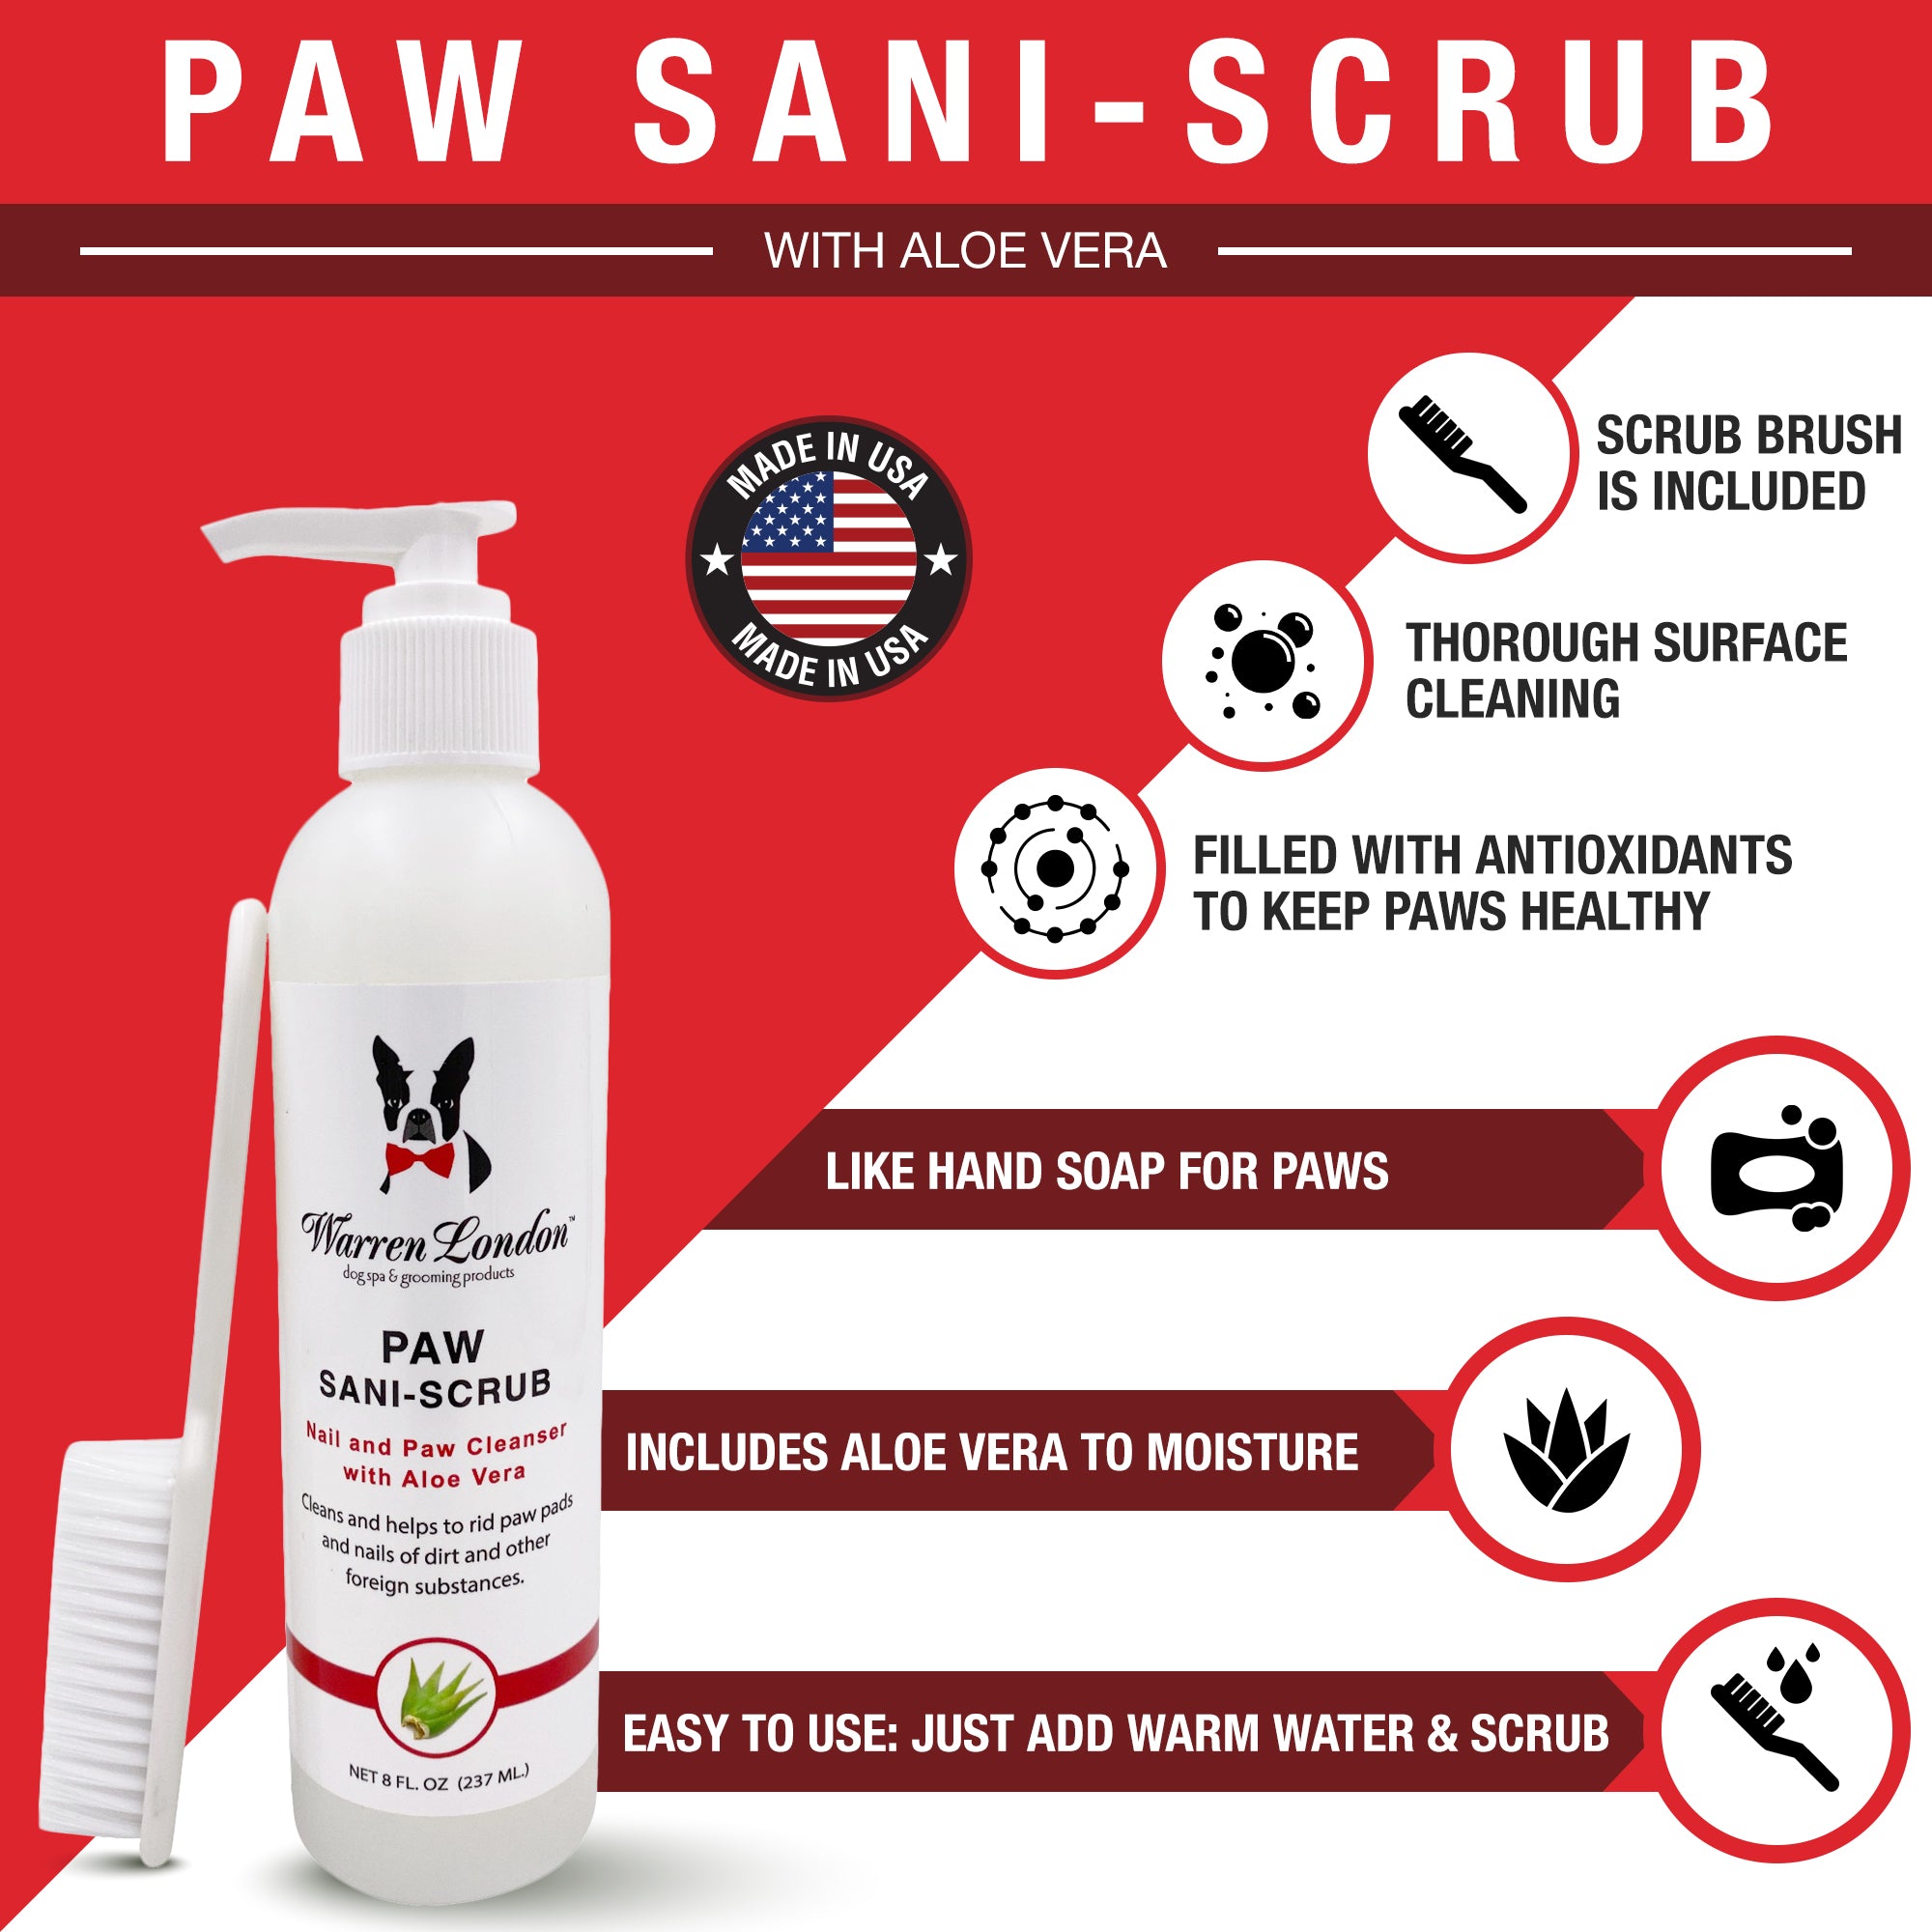 Paw Sani-Scrub - Paw and Nail Cleanser Spa Product Warren London 